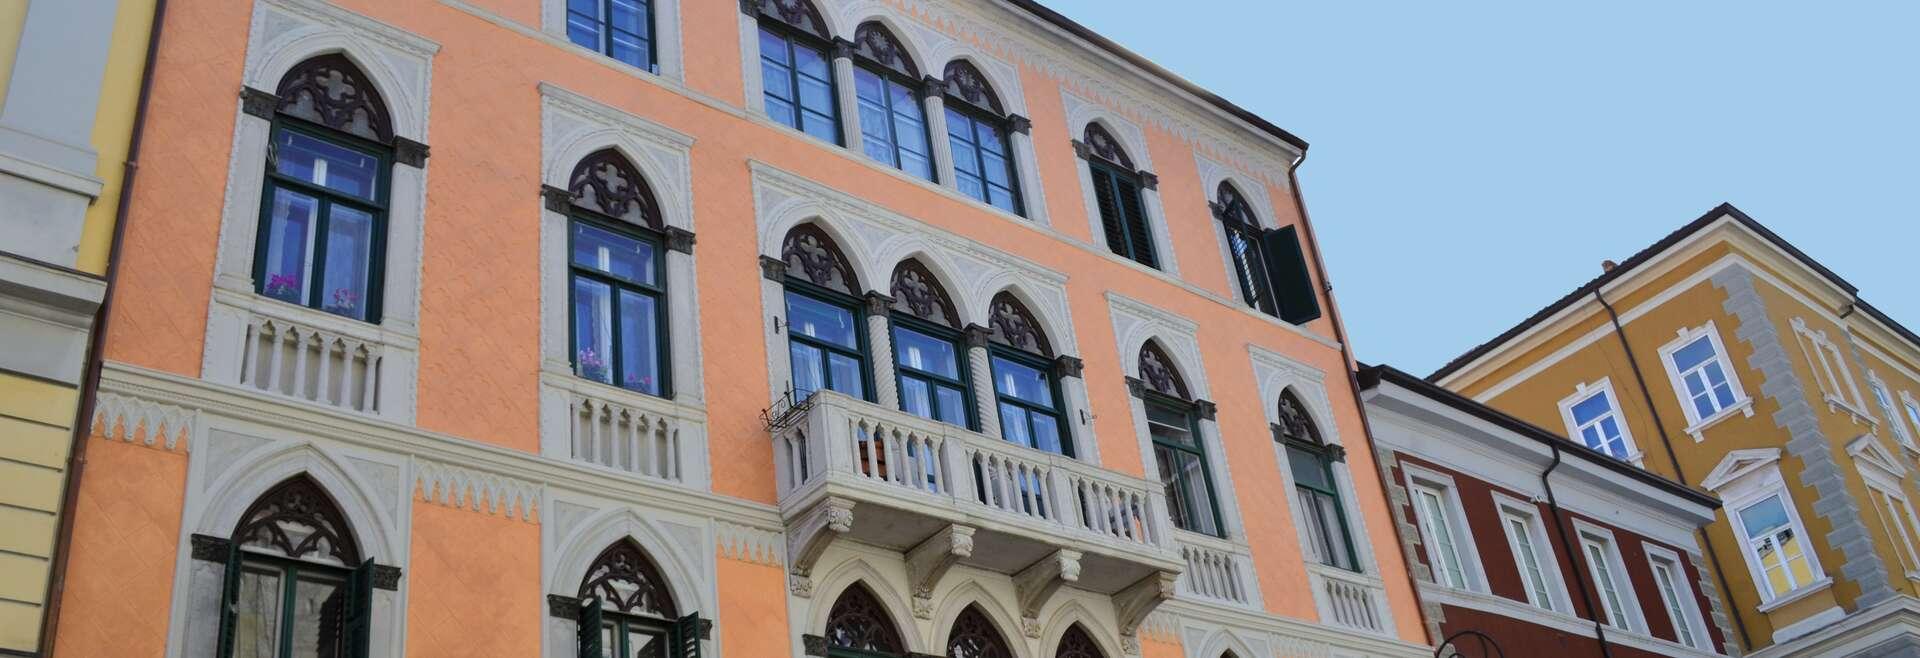 Séjour linguistique Italie, Trieste - Piccola Università Italiana Trieste - École